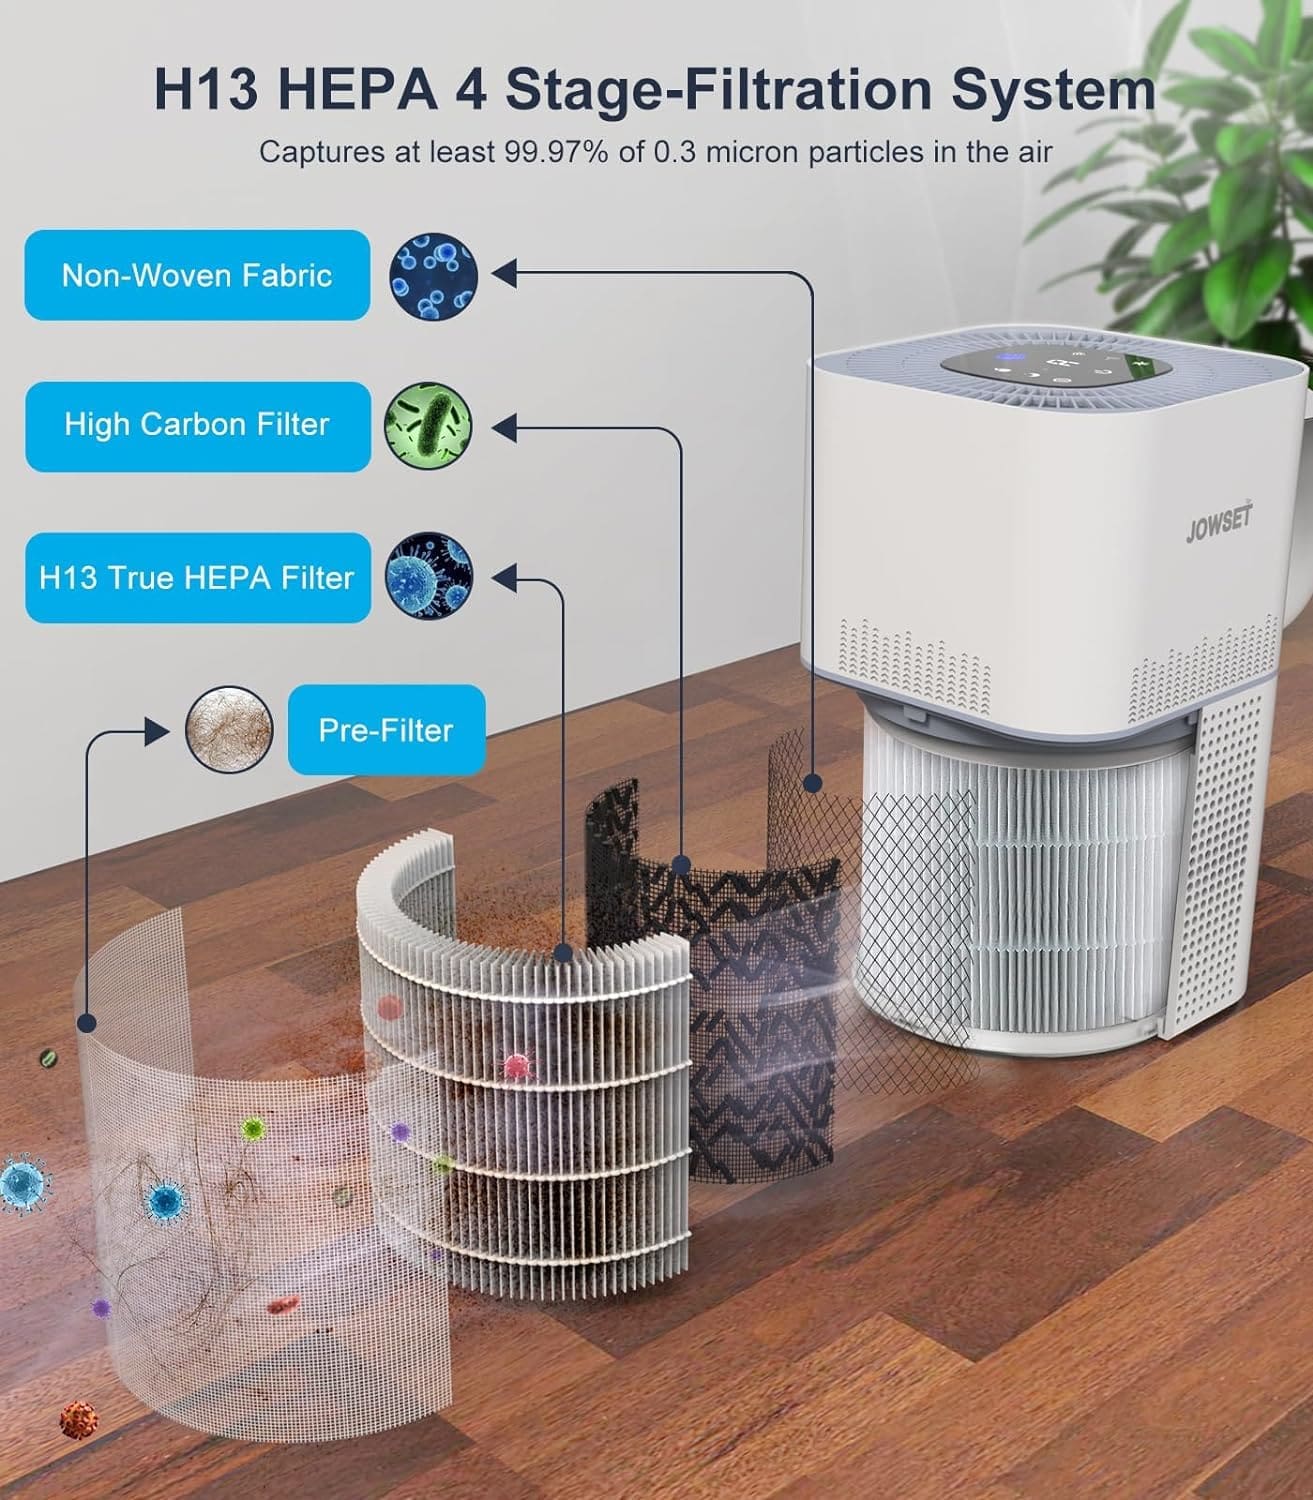 jowset smart wi fi air purifier review